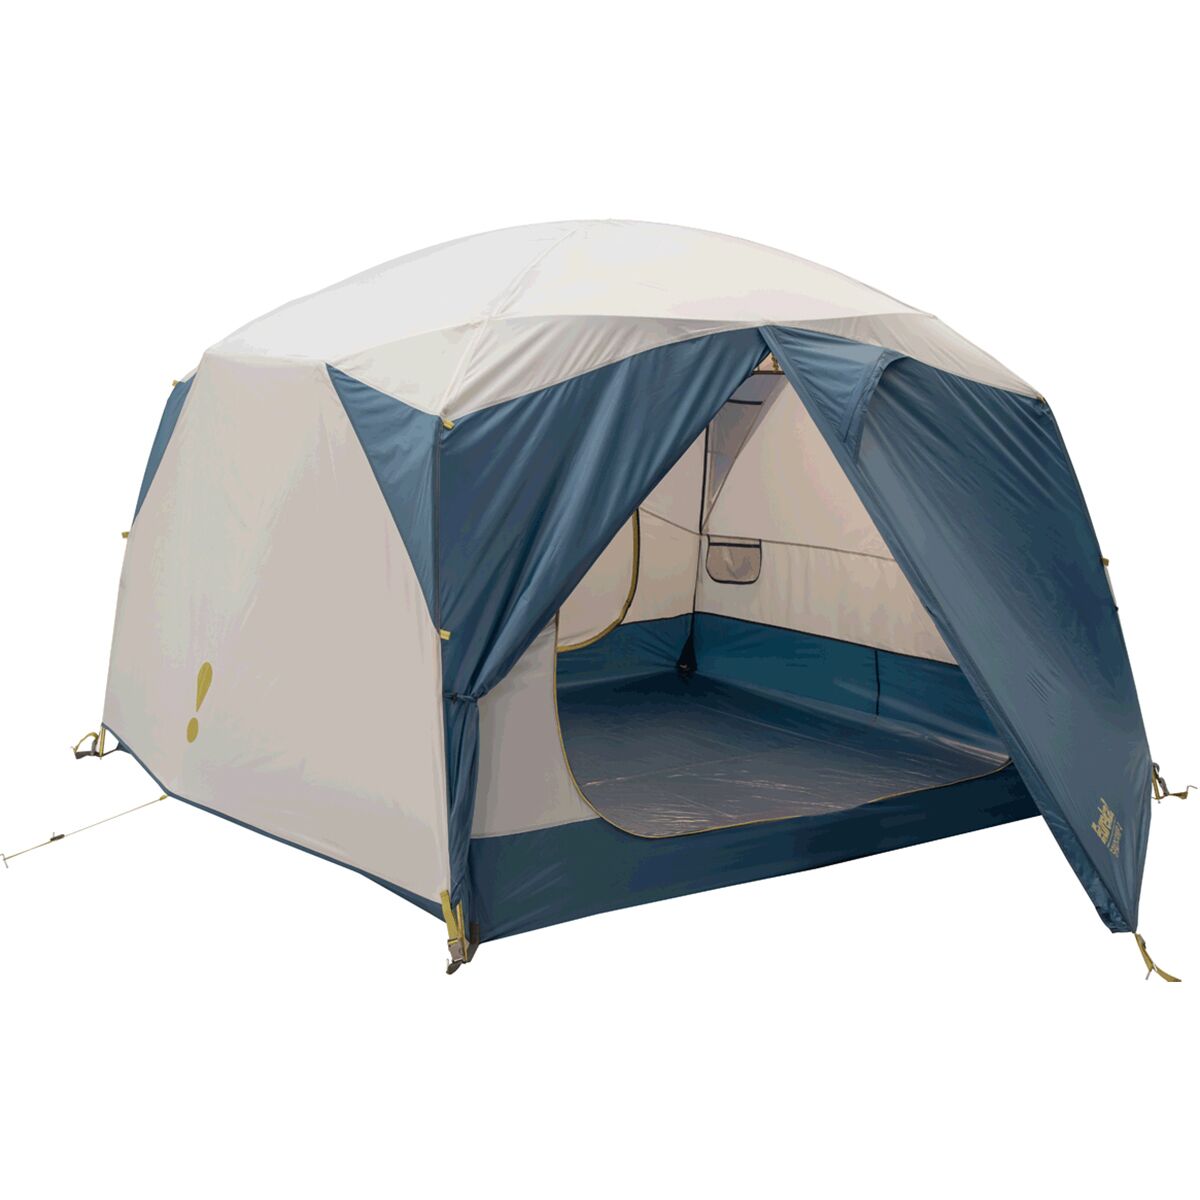 Camping space. Палатка Eureka Assault Outfitter 2. Палатка Эврика Eureka. Палатка Eureka Assault Outfitter 4. Кемпинговая палатка Eureka.